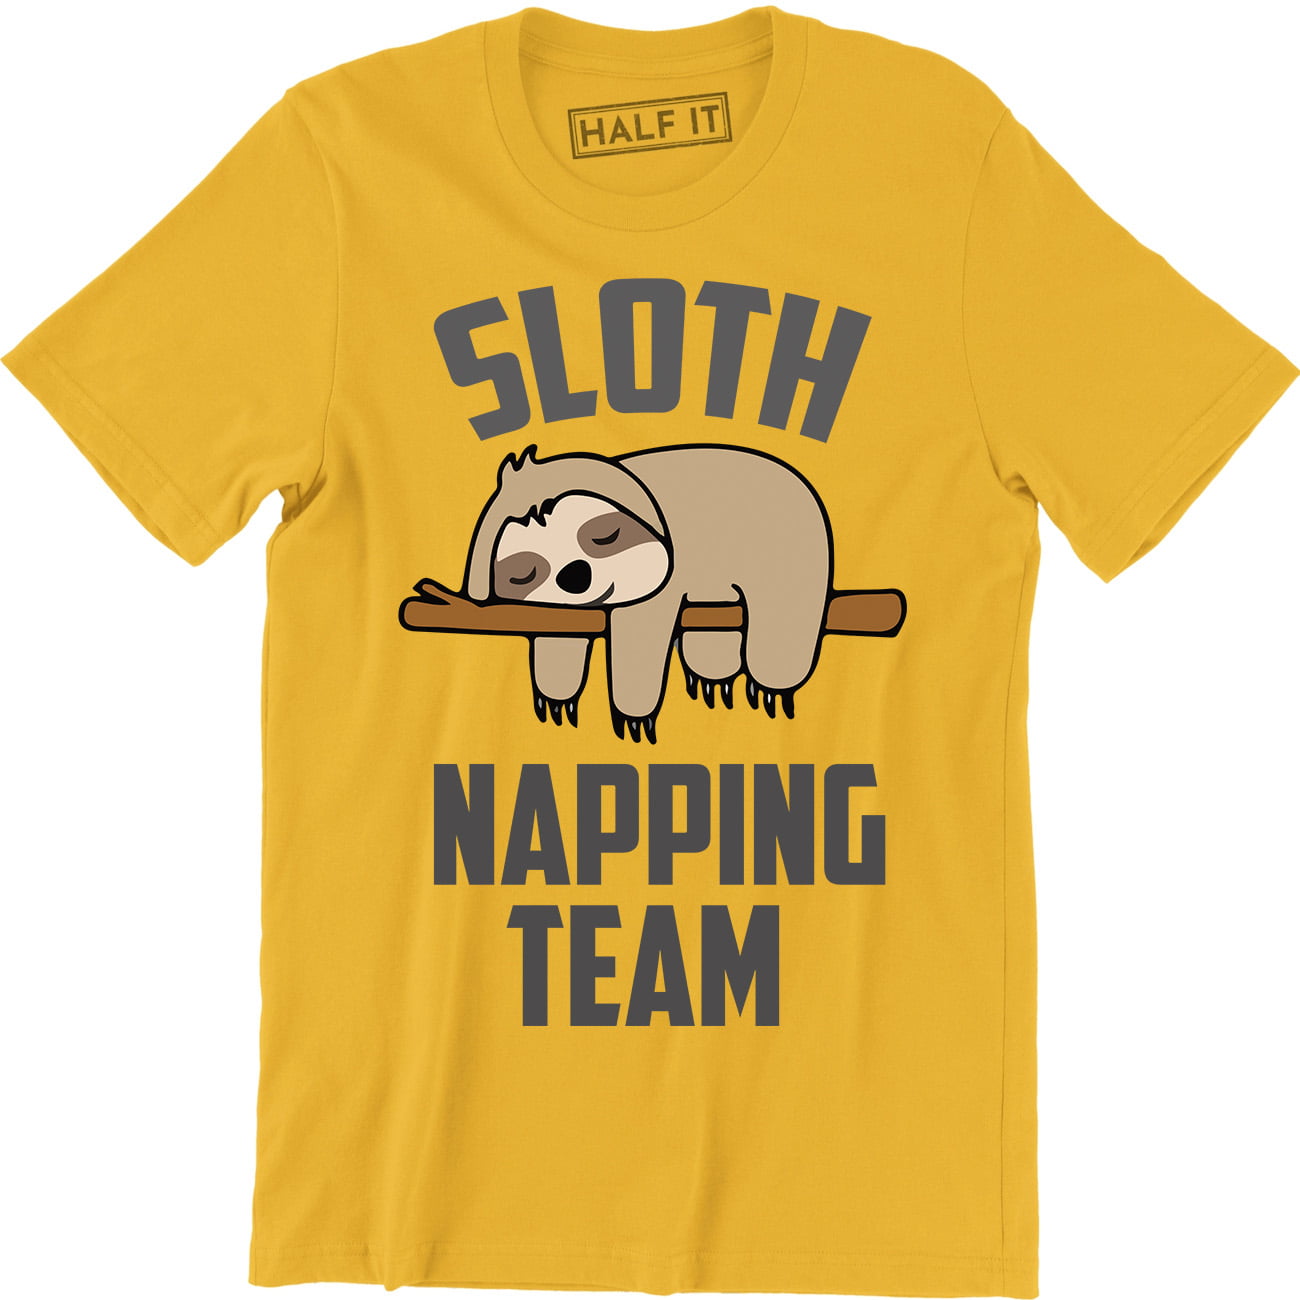 Sloth Napping Team Let's Nap Instead Funny Men's Tee Shirt - Walmart.com